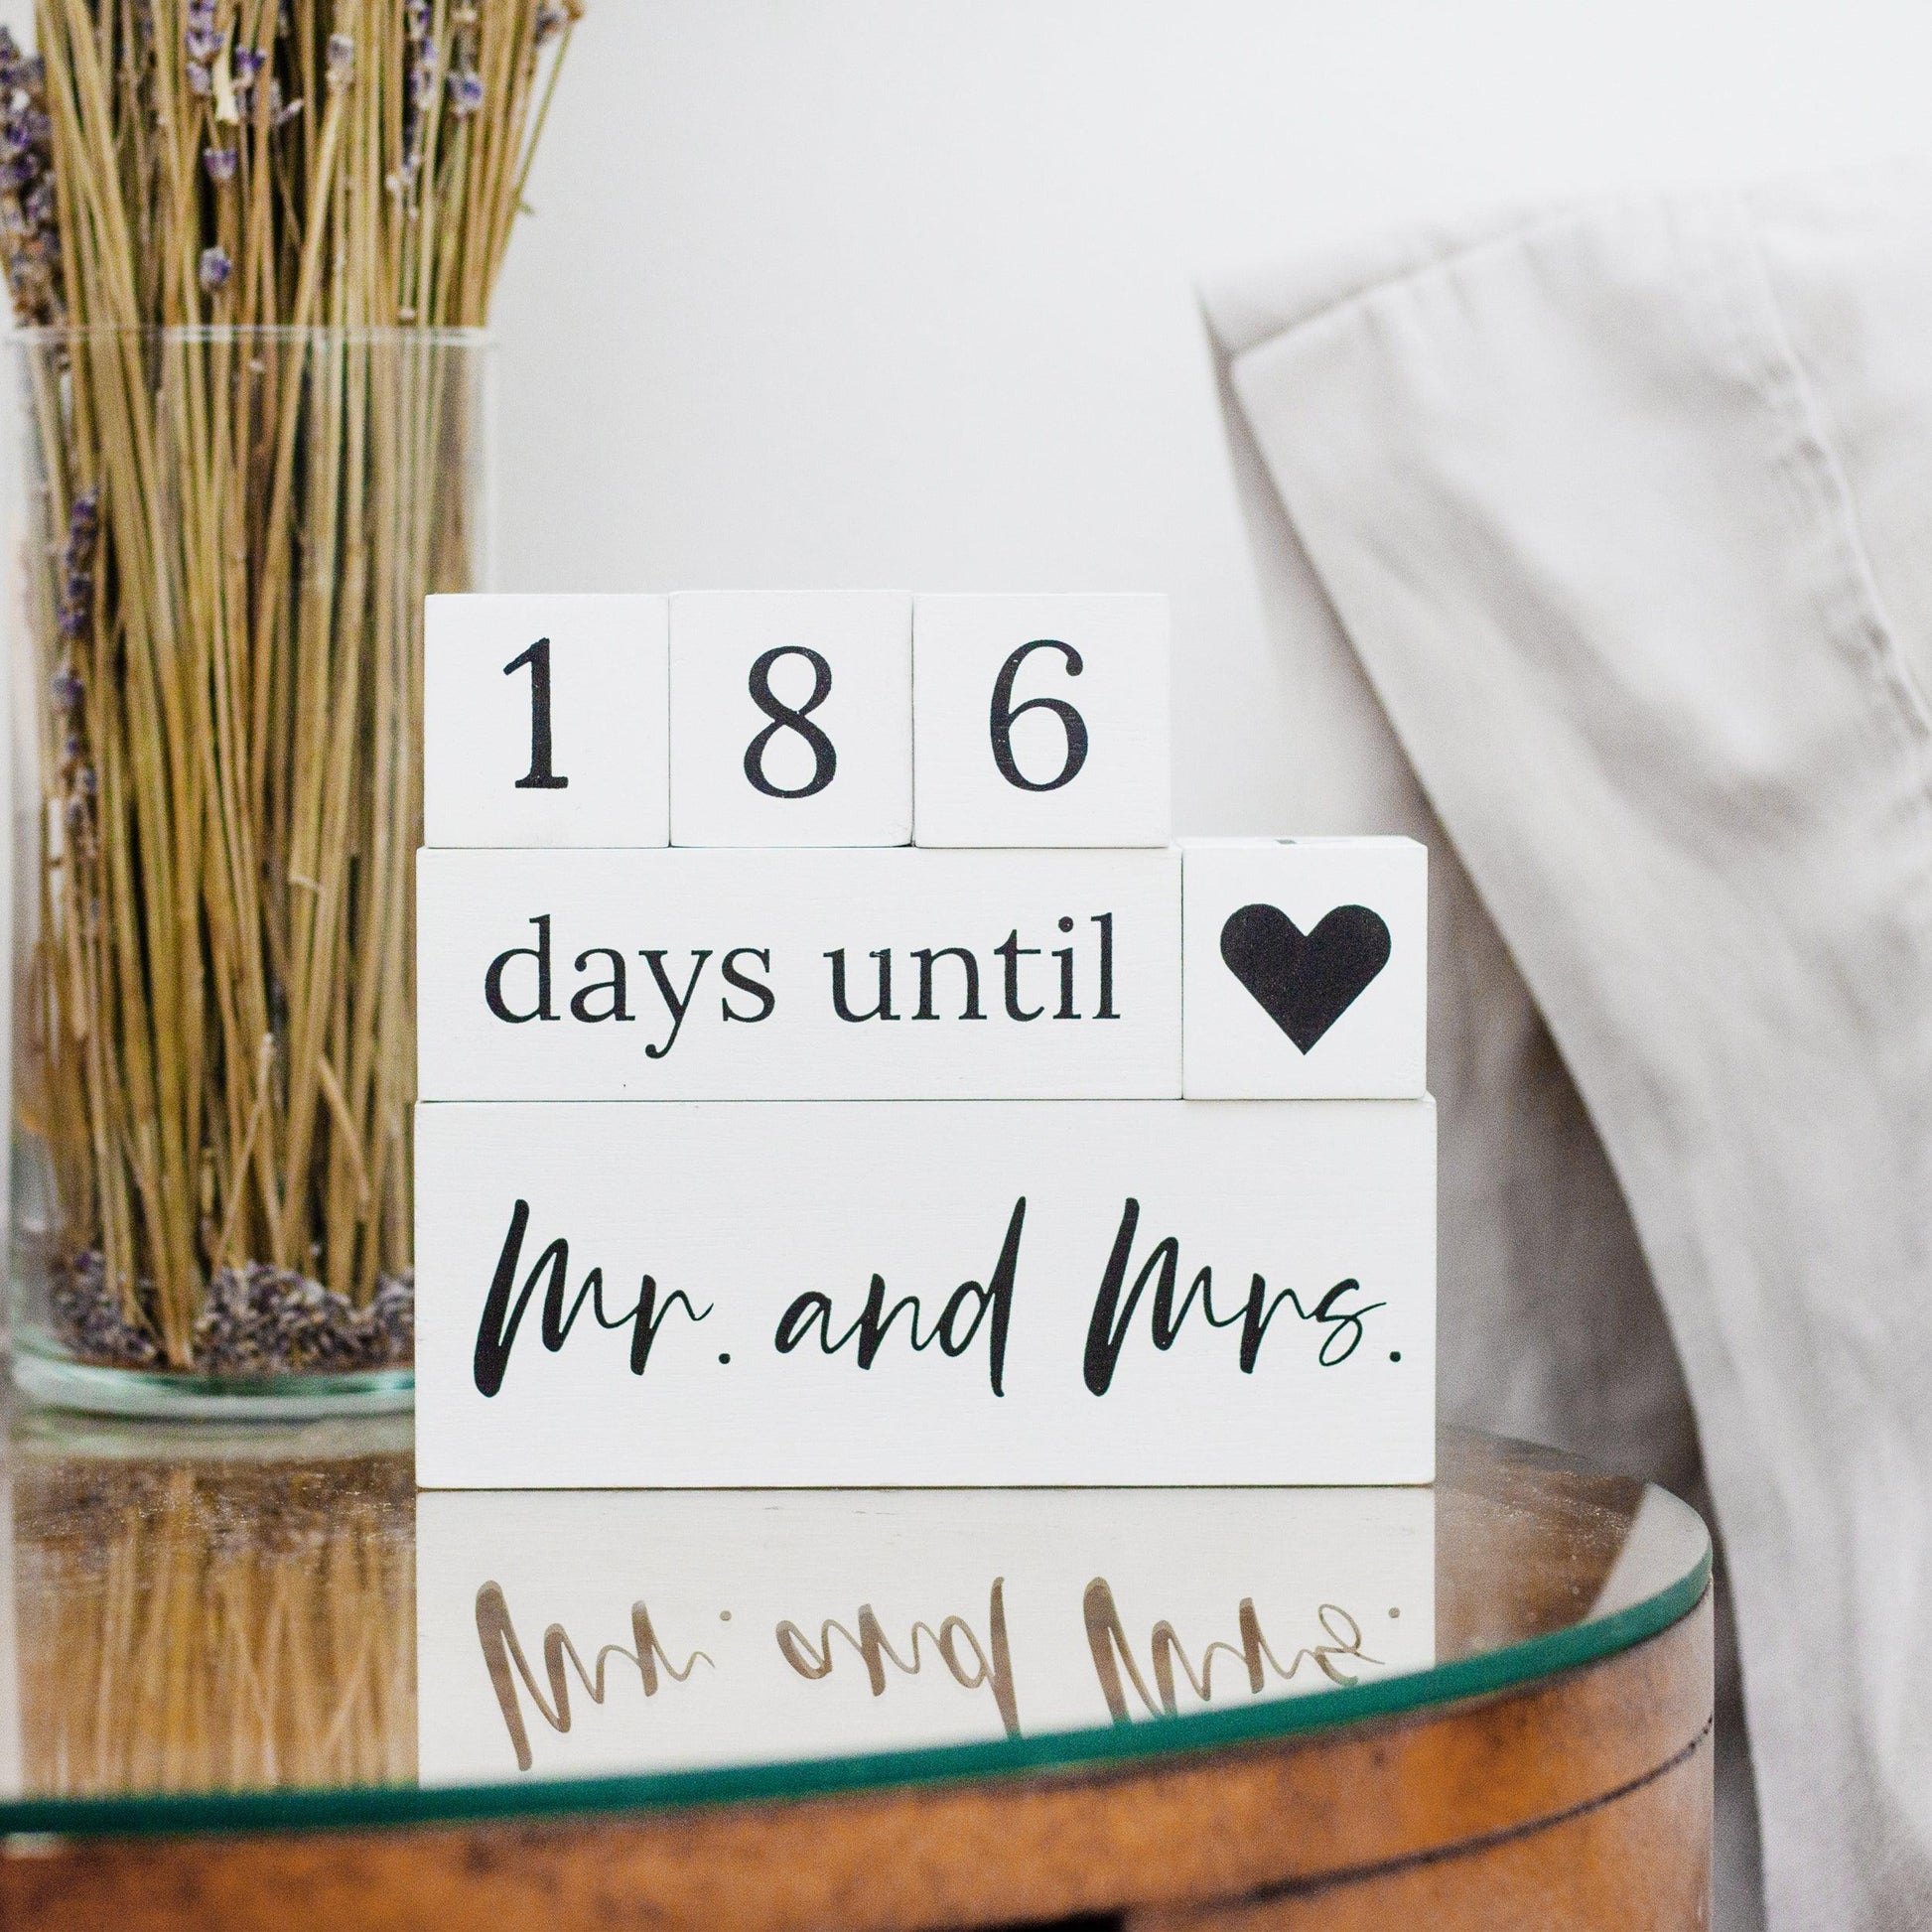 Mr & Mrs Wedding Countdown Blocks - JAHomesUS